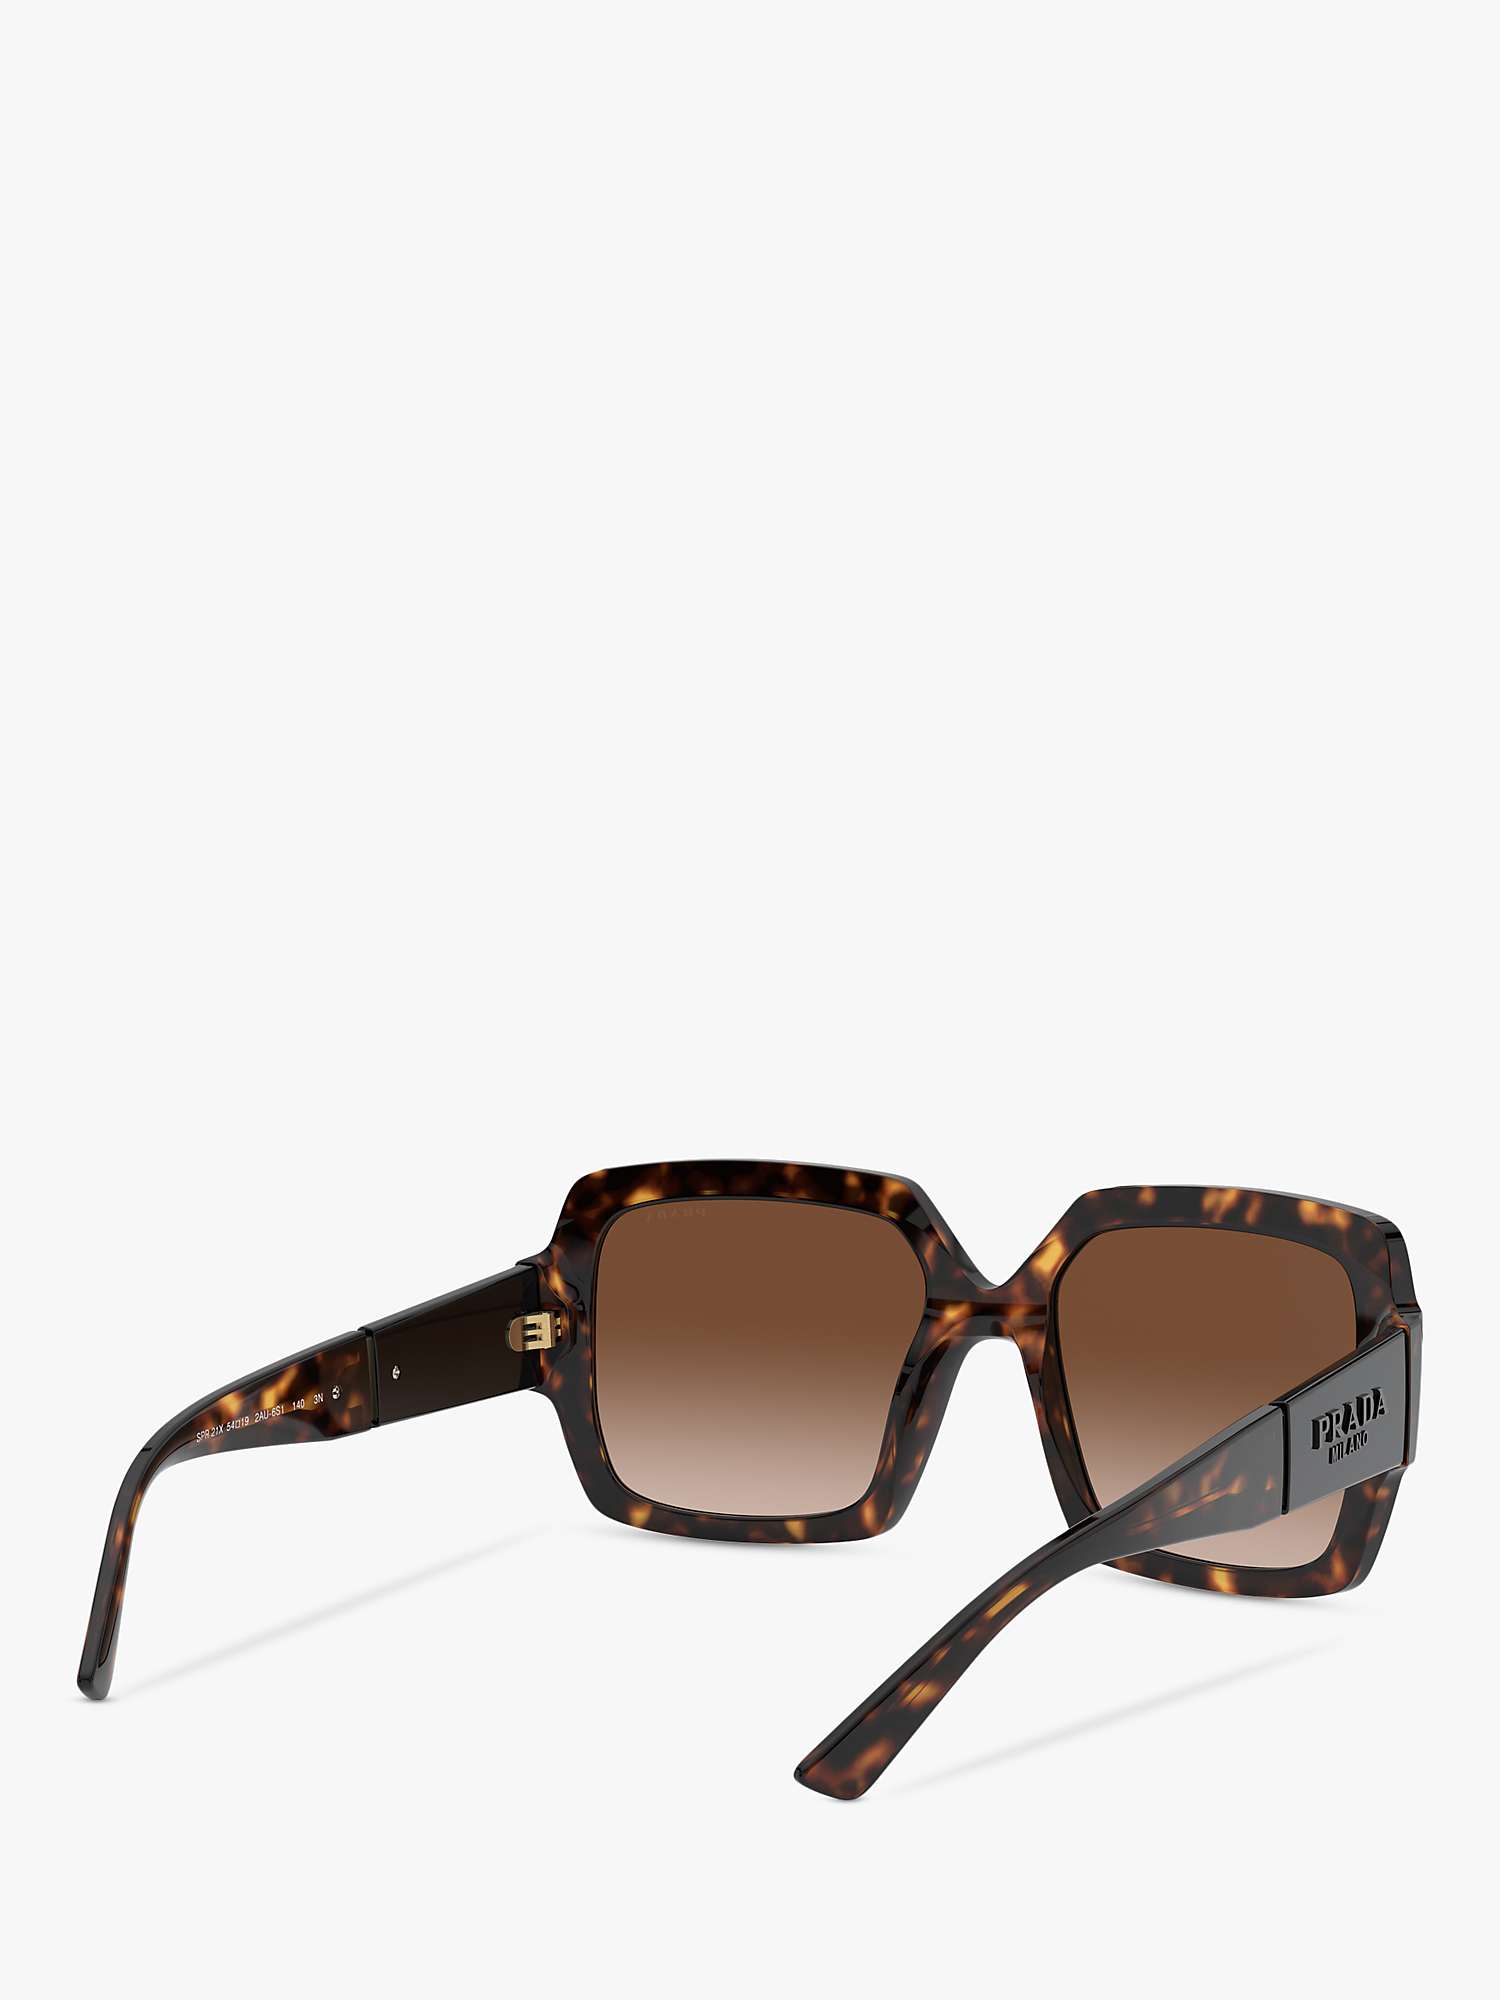 Buy Prada PR 21XS Women's Square Sunglasses, Tortoiseshell/Brown Gradient Online at johnlewis.com